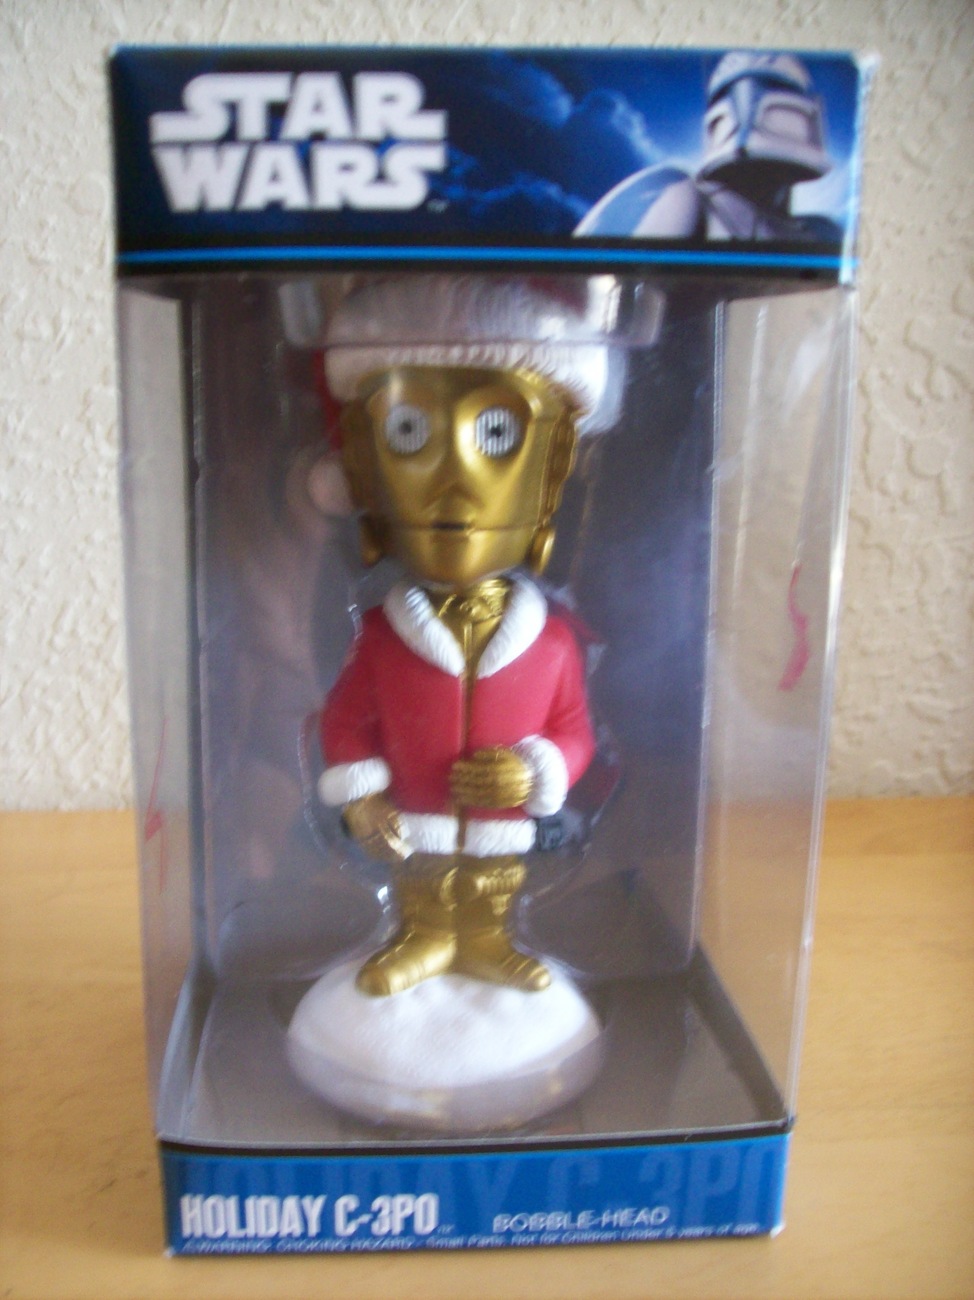 2010 Star Wars Holiday C-3PO Bobble-Head Figurine - $15.00